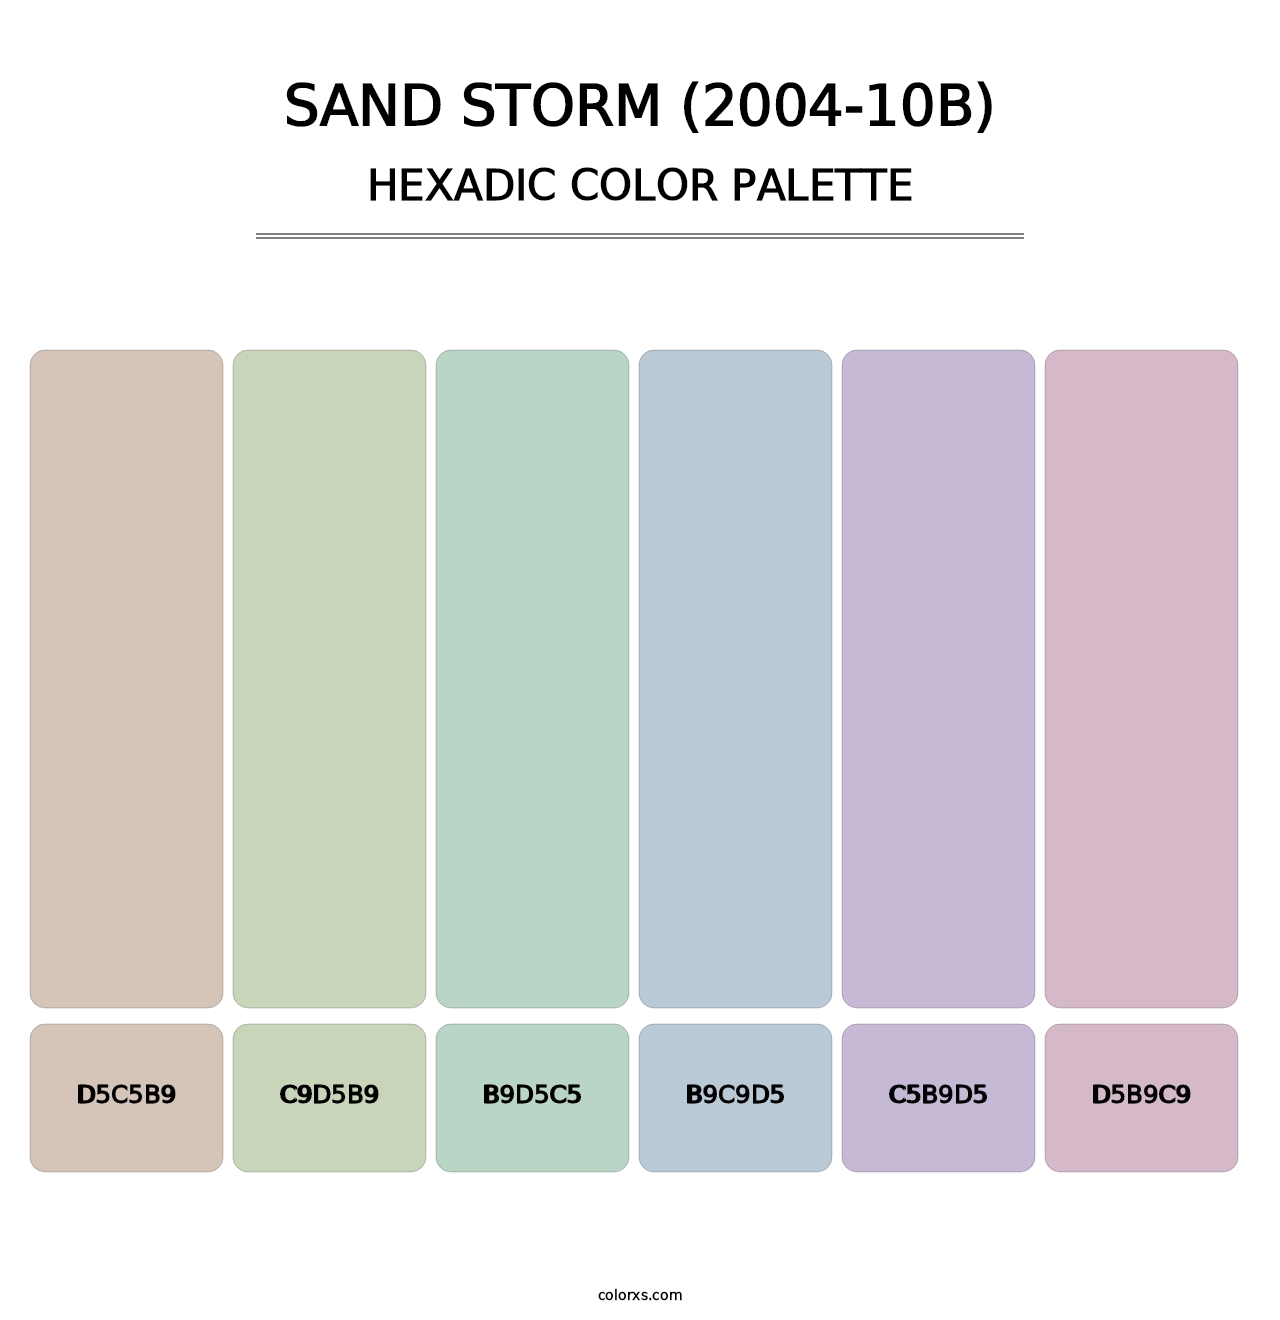 Sand Storm (2004-10B) - Hexadic Color Palette